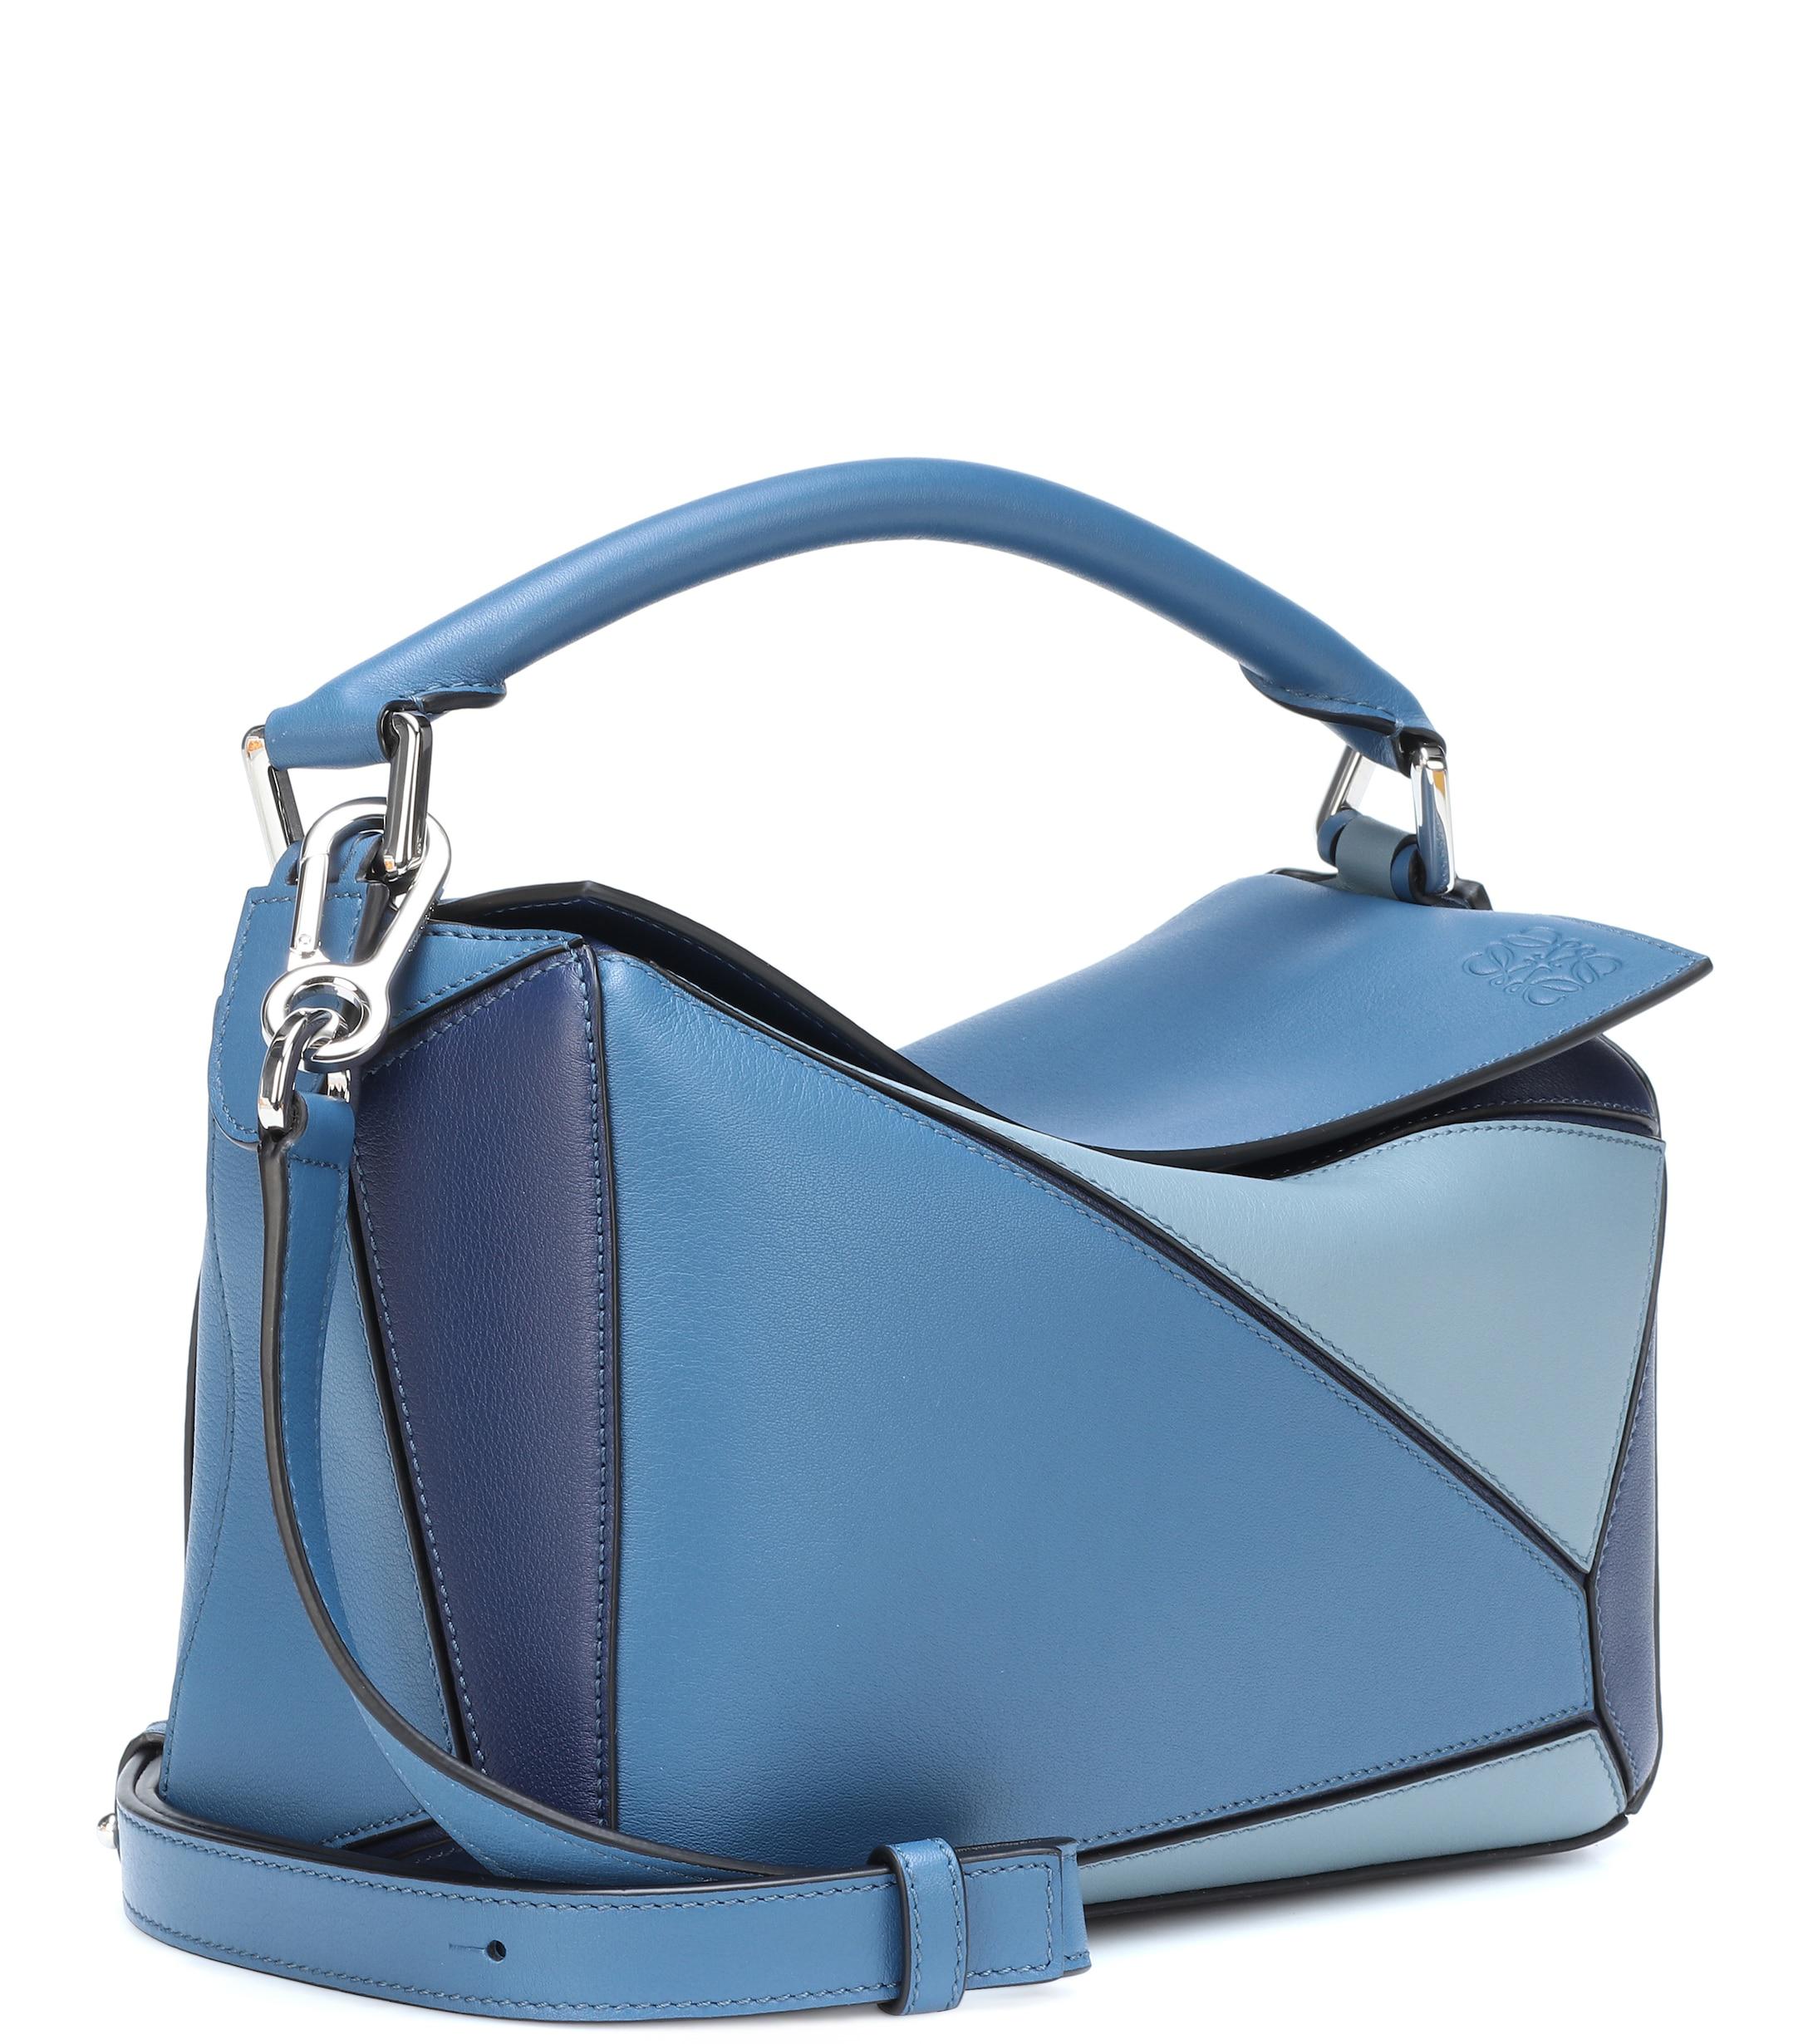 Loewe Puzzle Leather Shoulder Bag in Blue - Lyst